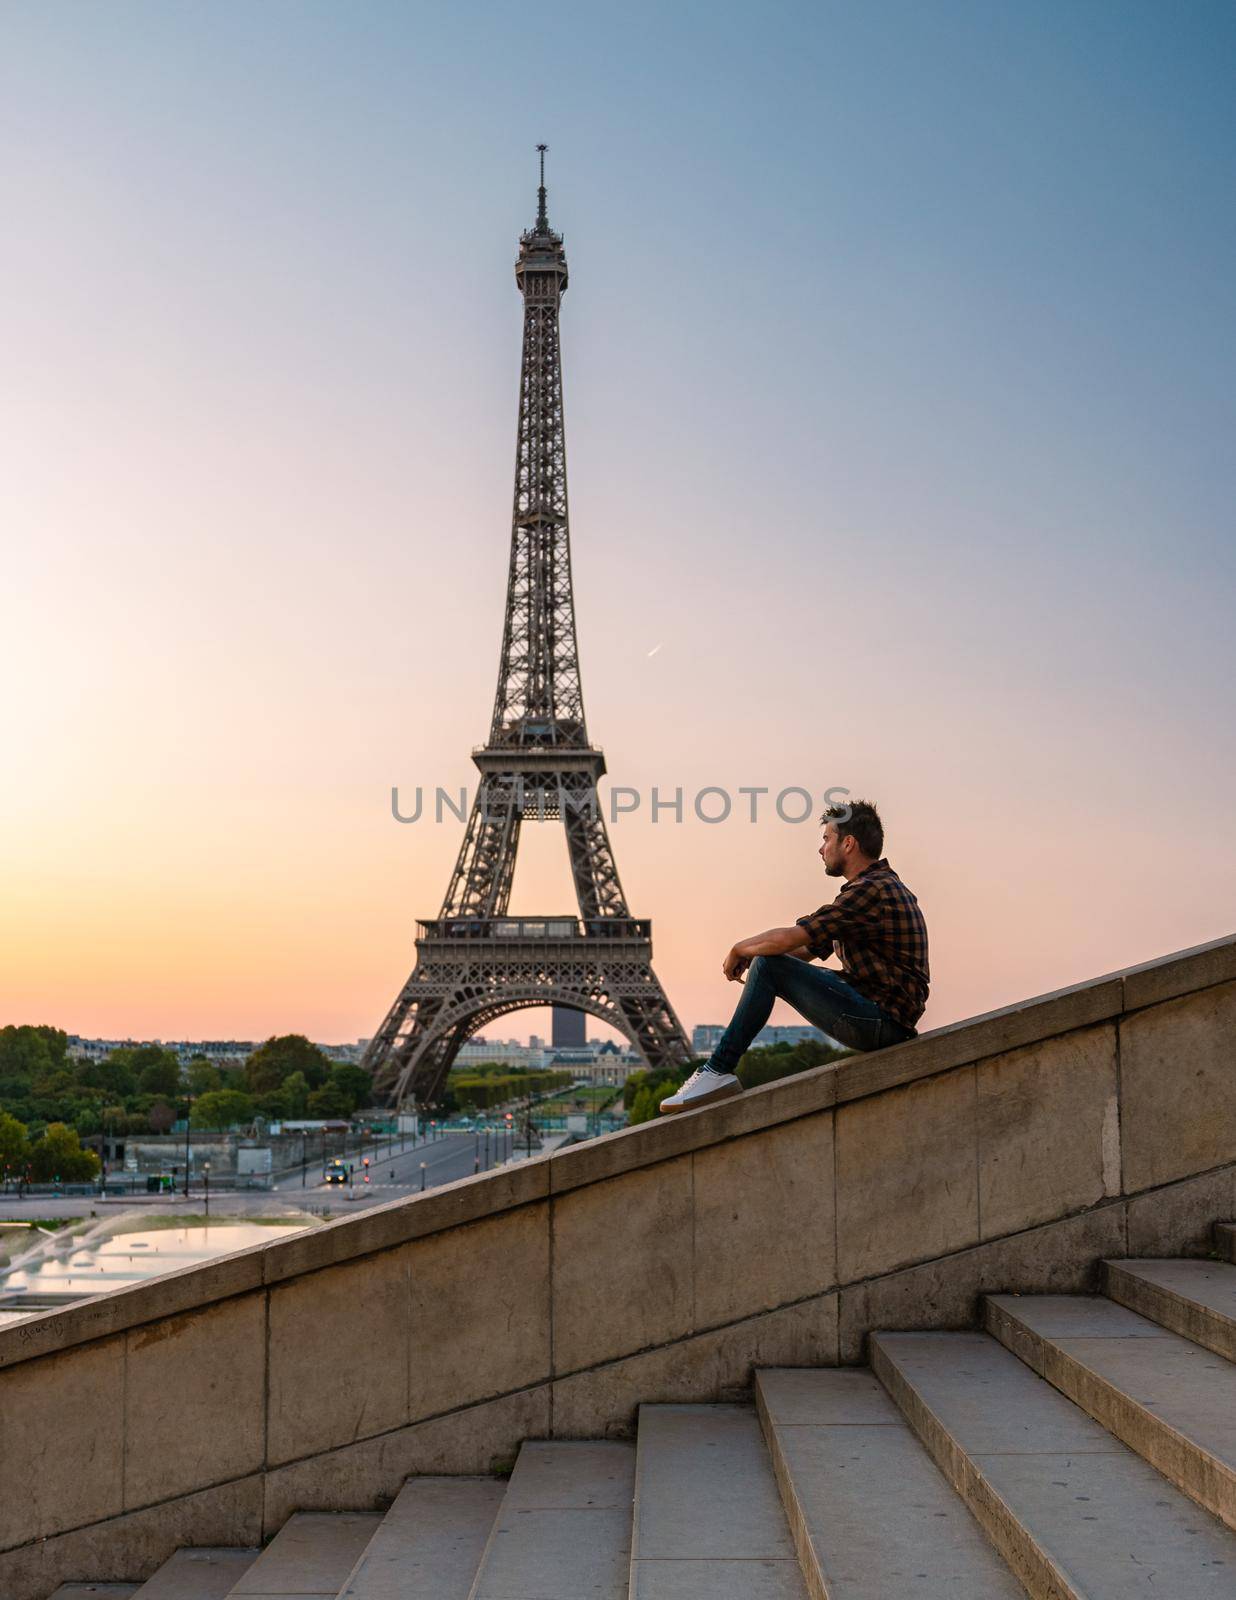 Eiffel tower at Sunrise in Paris France, Paris Eifel tower on a summer day by fokkebok